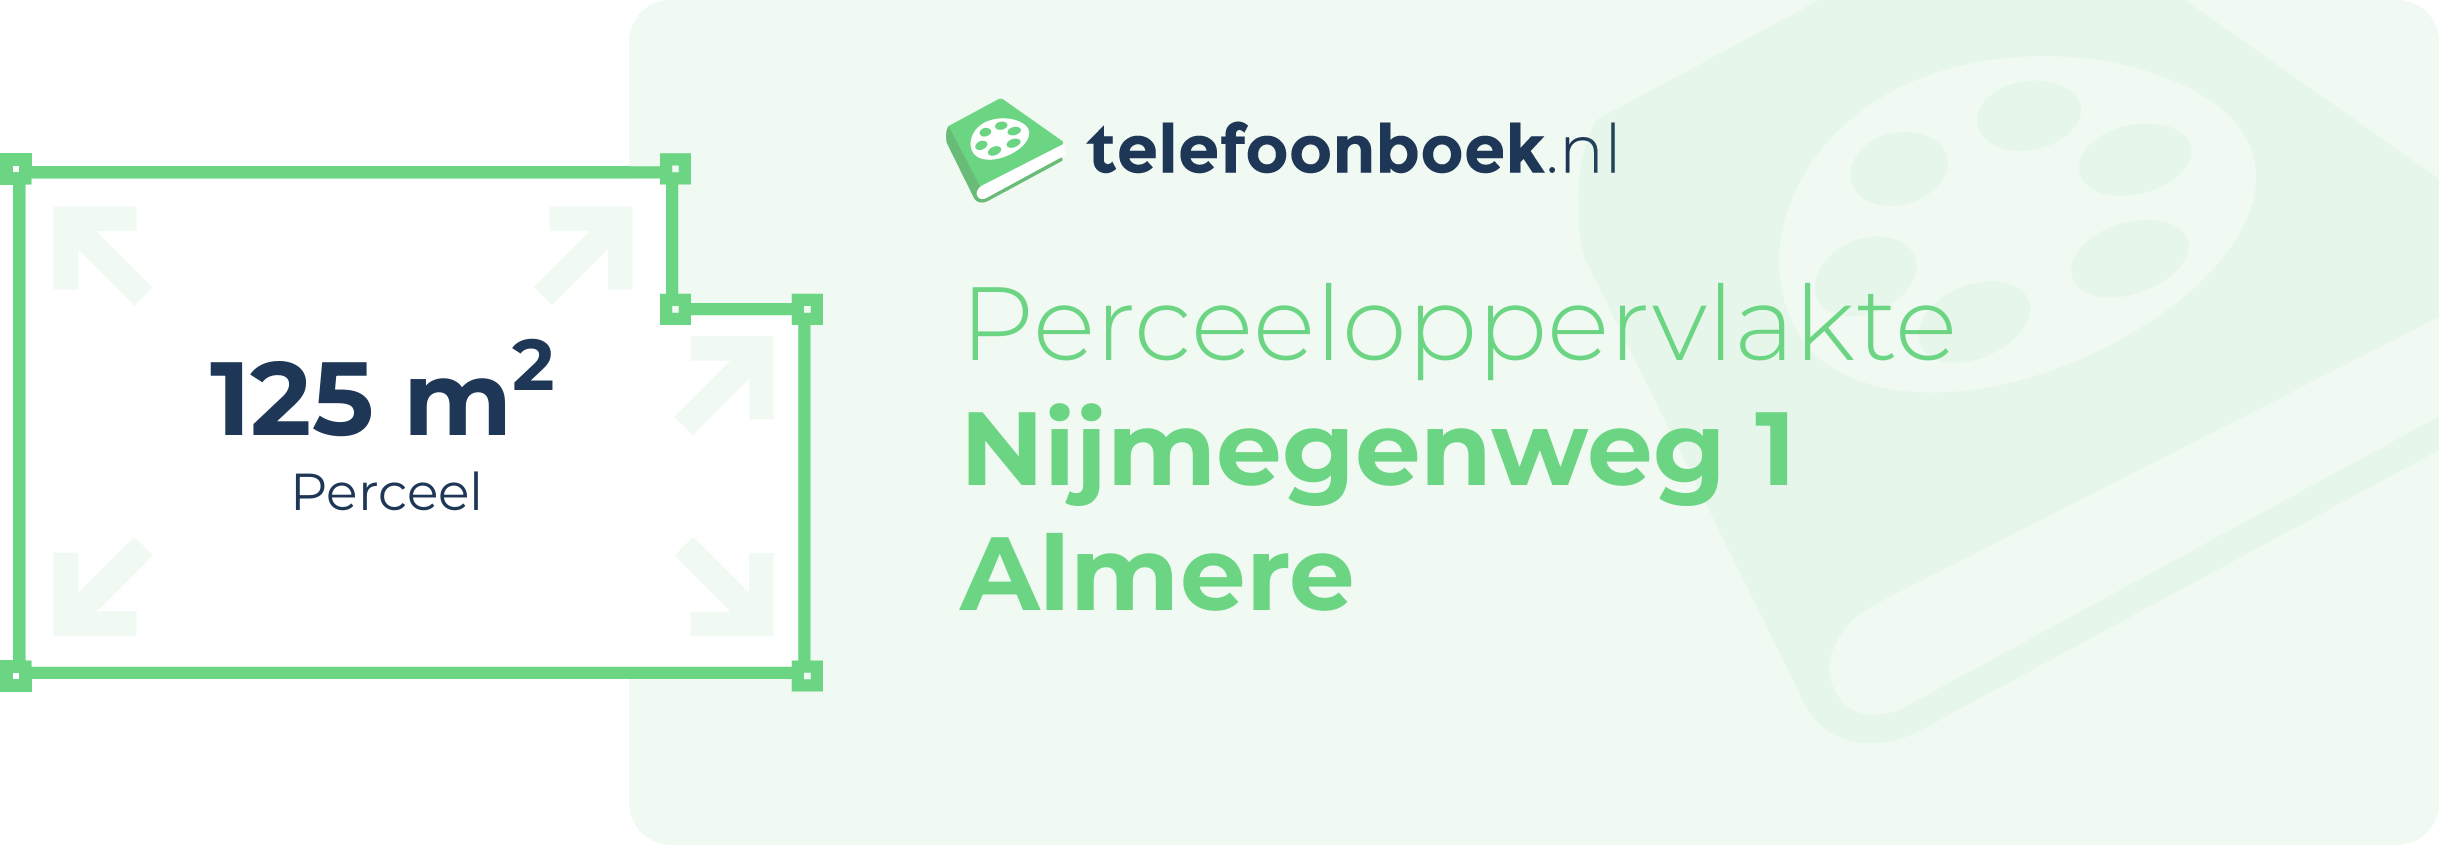 Perceeloppervlakte Nijmegenweg 1 Almere